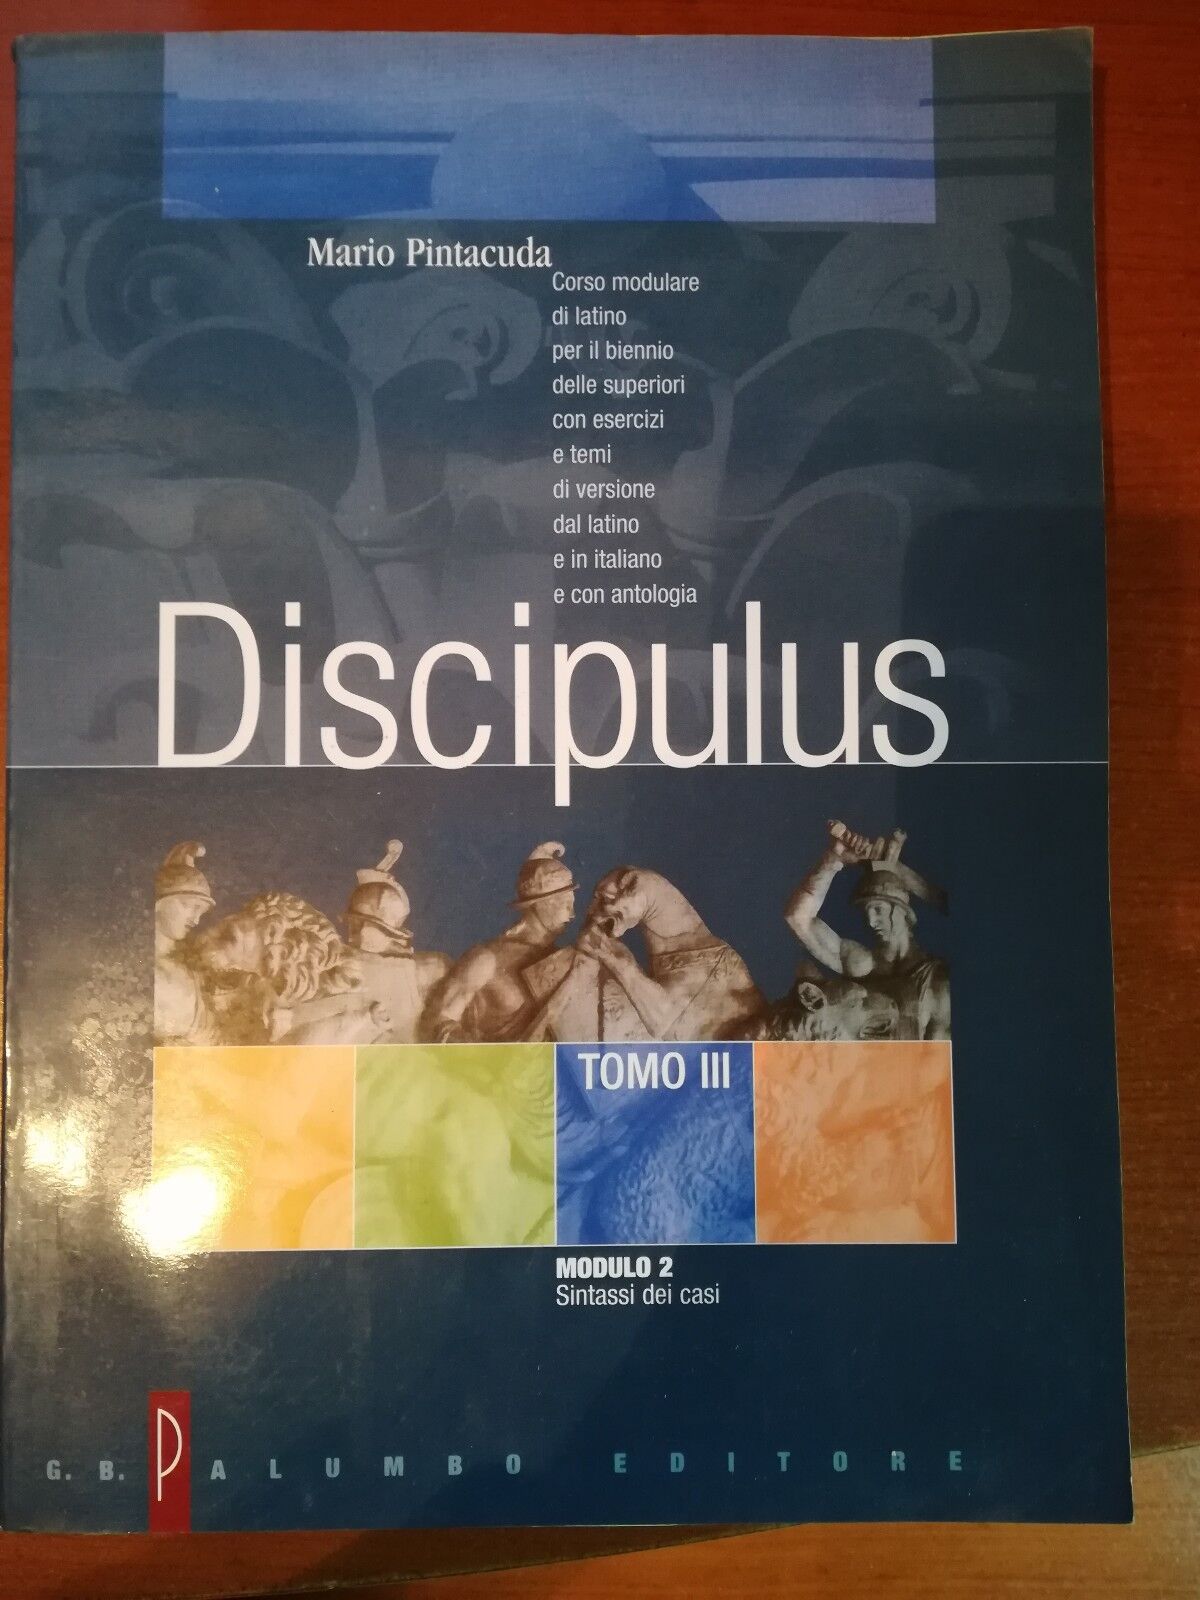 Discipulus Tomo III - Mario Pintacuda - Palumbo - 2002 - M